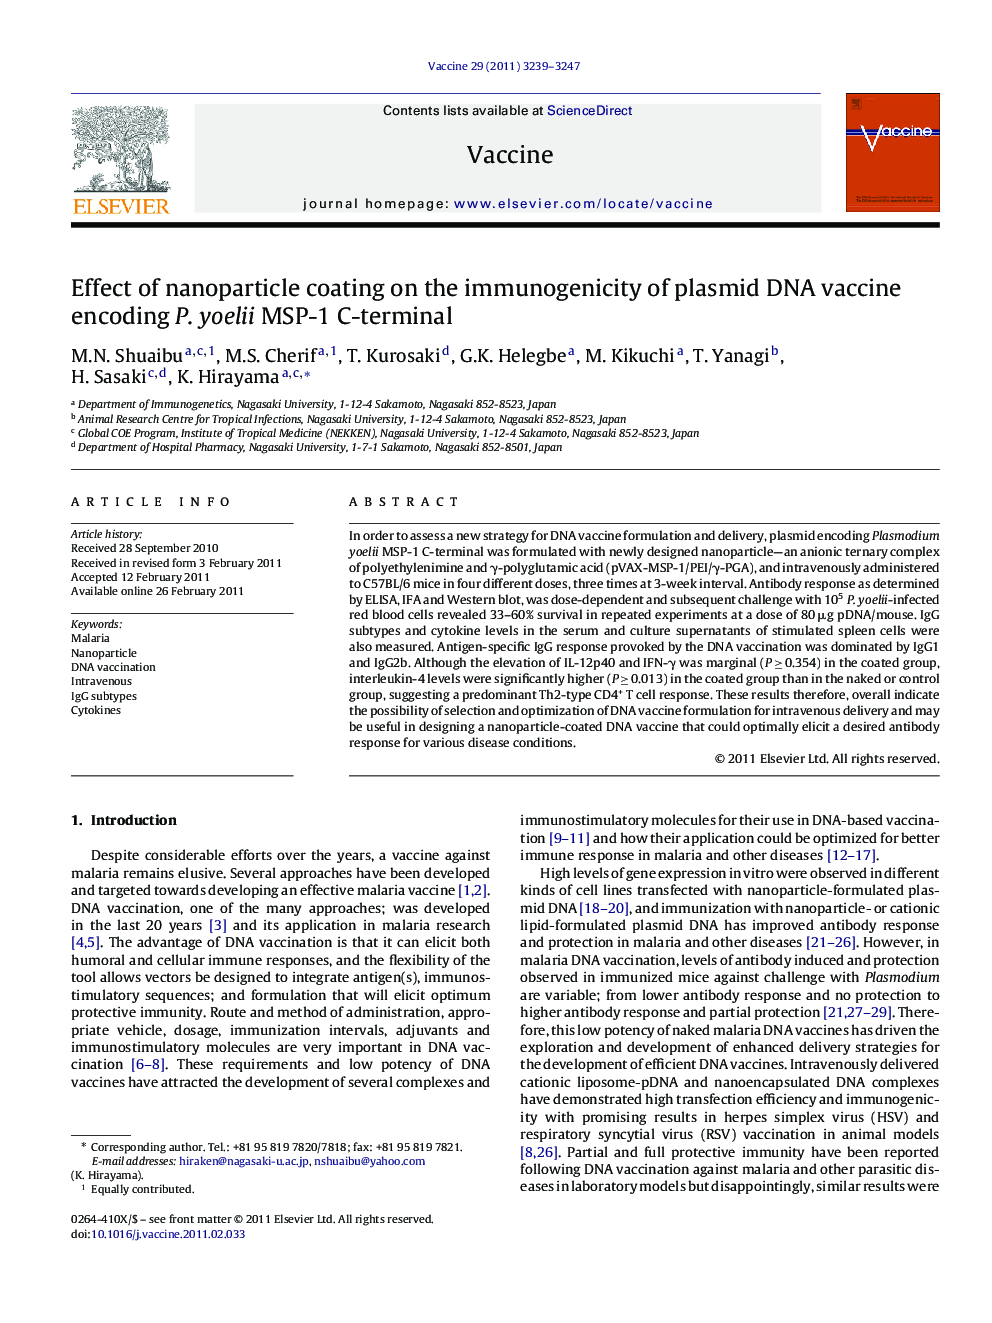 Effect of nanoparticle coating on the immunogenicity of plasmid DNA vaccine encoding P. yoelii MSP-1 C-terminal